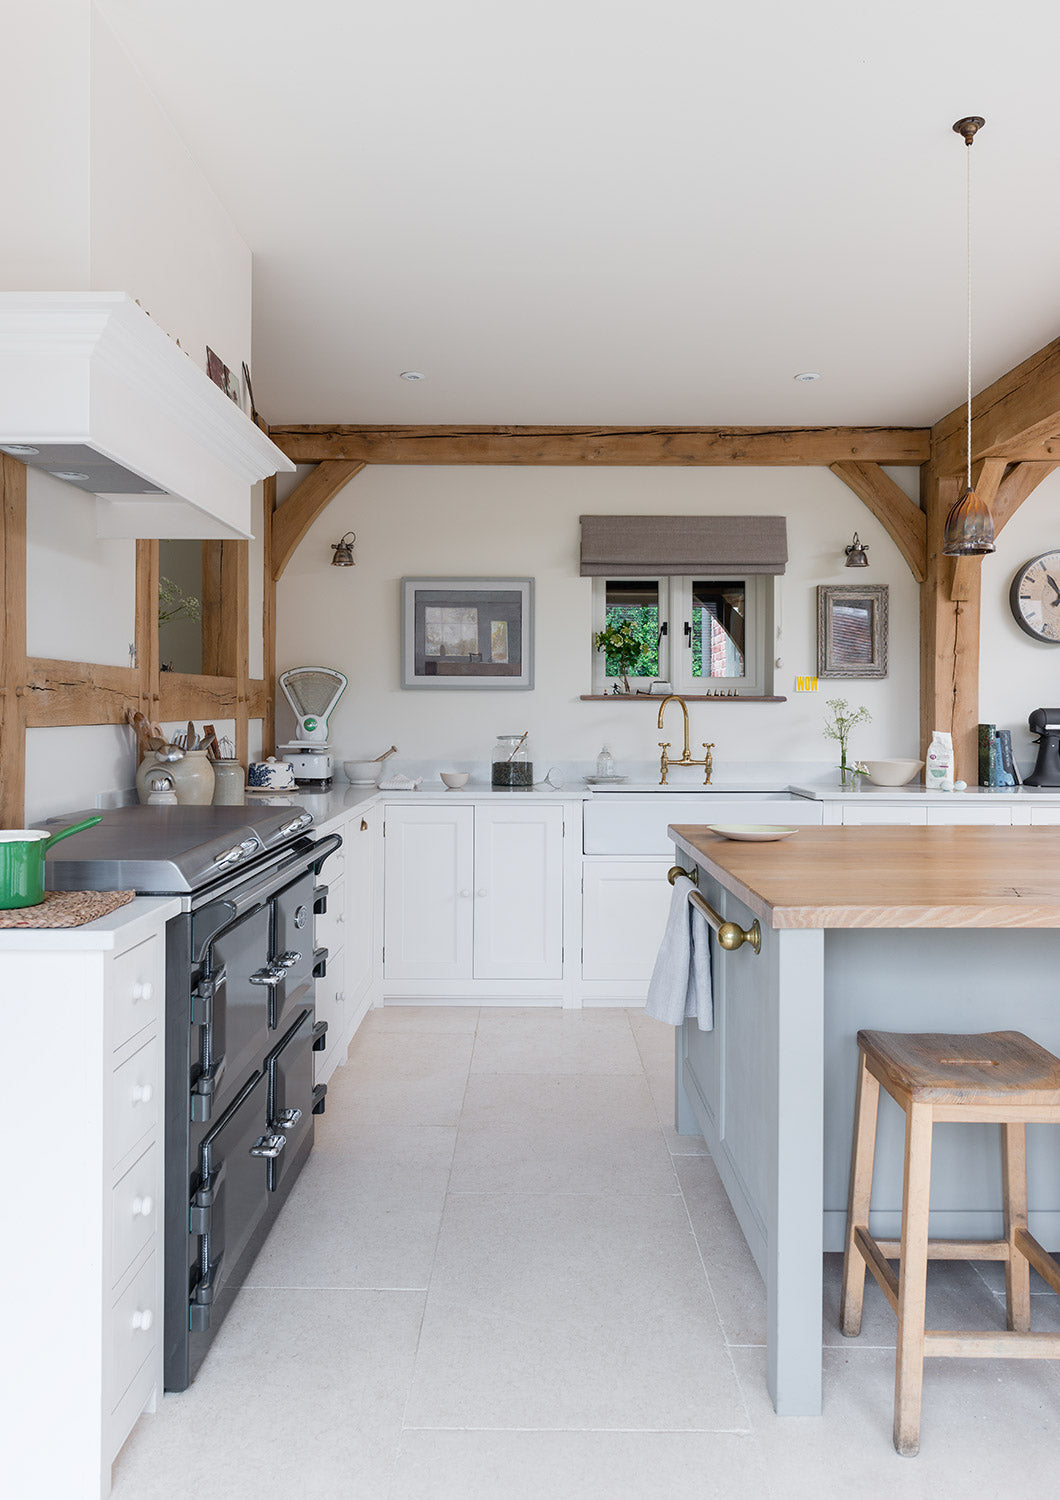 Here's how to get the British country kitchen look - www.lovetohome.co.uk -Photo credit @merryminvera and @border_oak via Instagram https://www.borderoak.com/